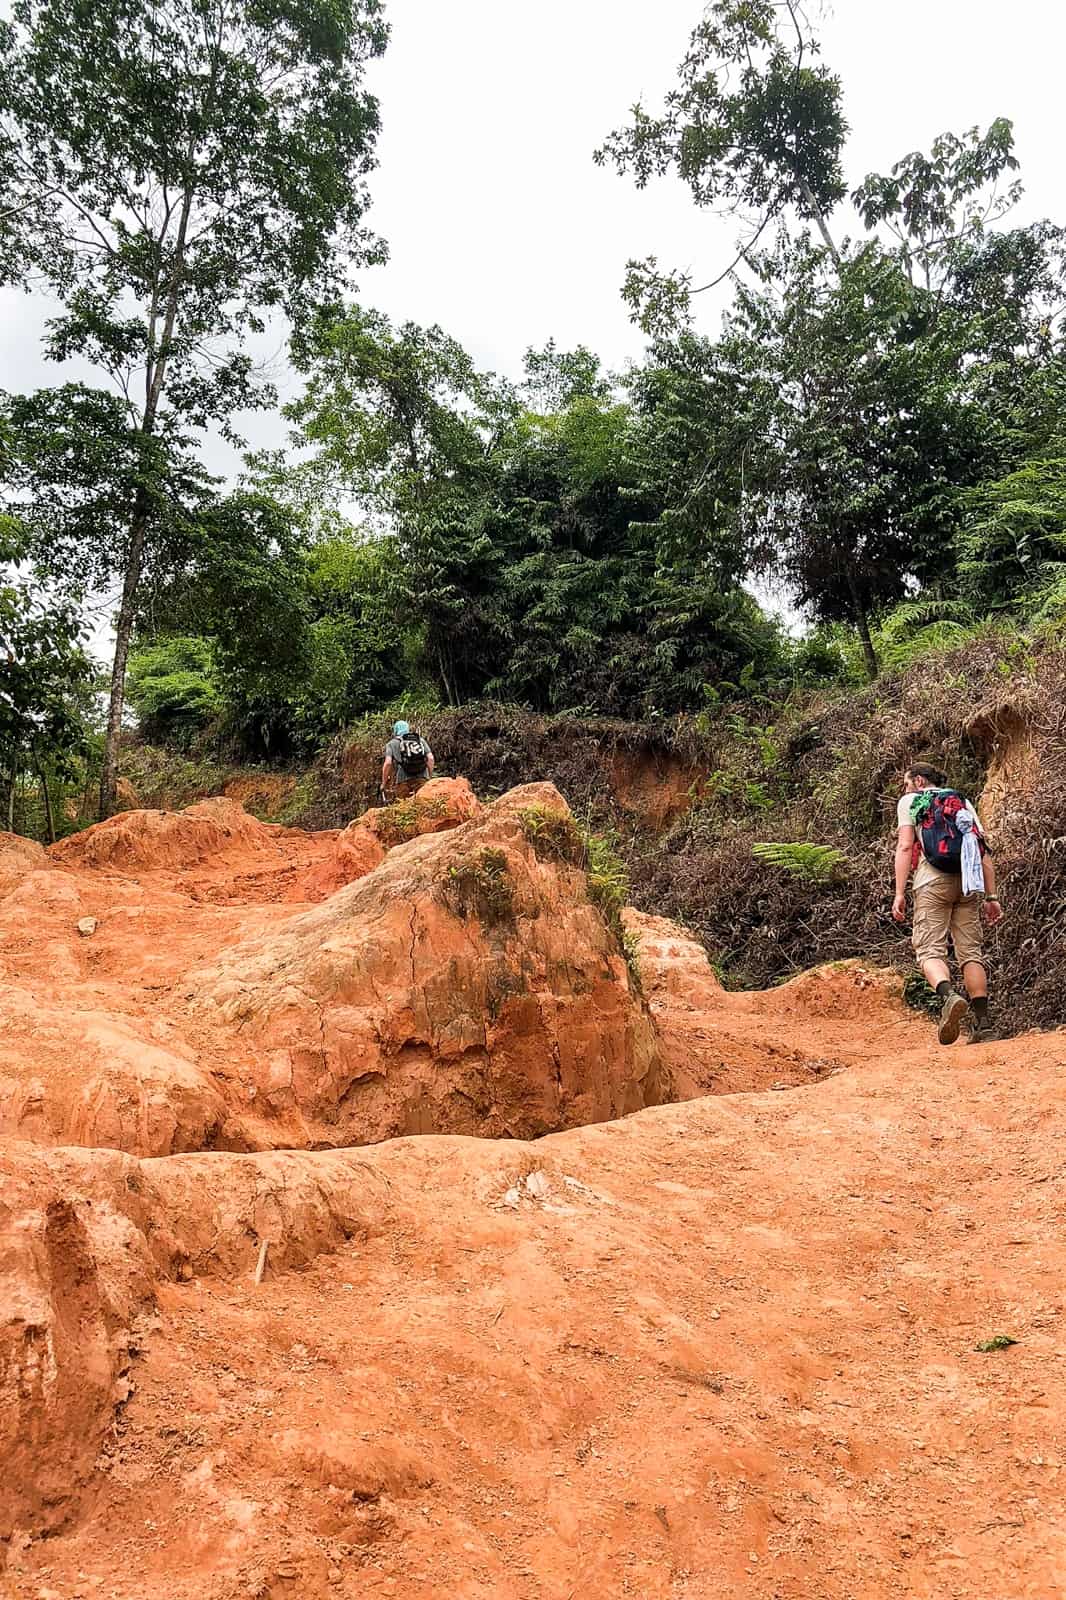 Two men trekking on steep, orange mud trails on the Lost City trek in Colombia.